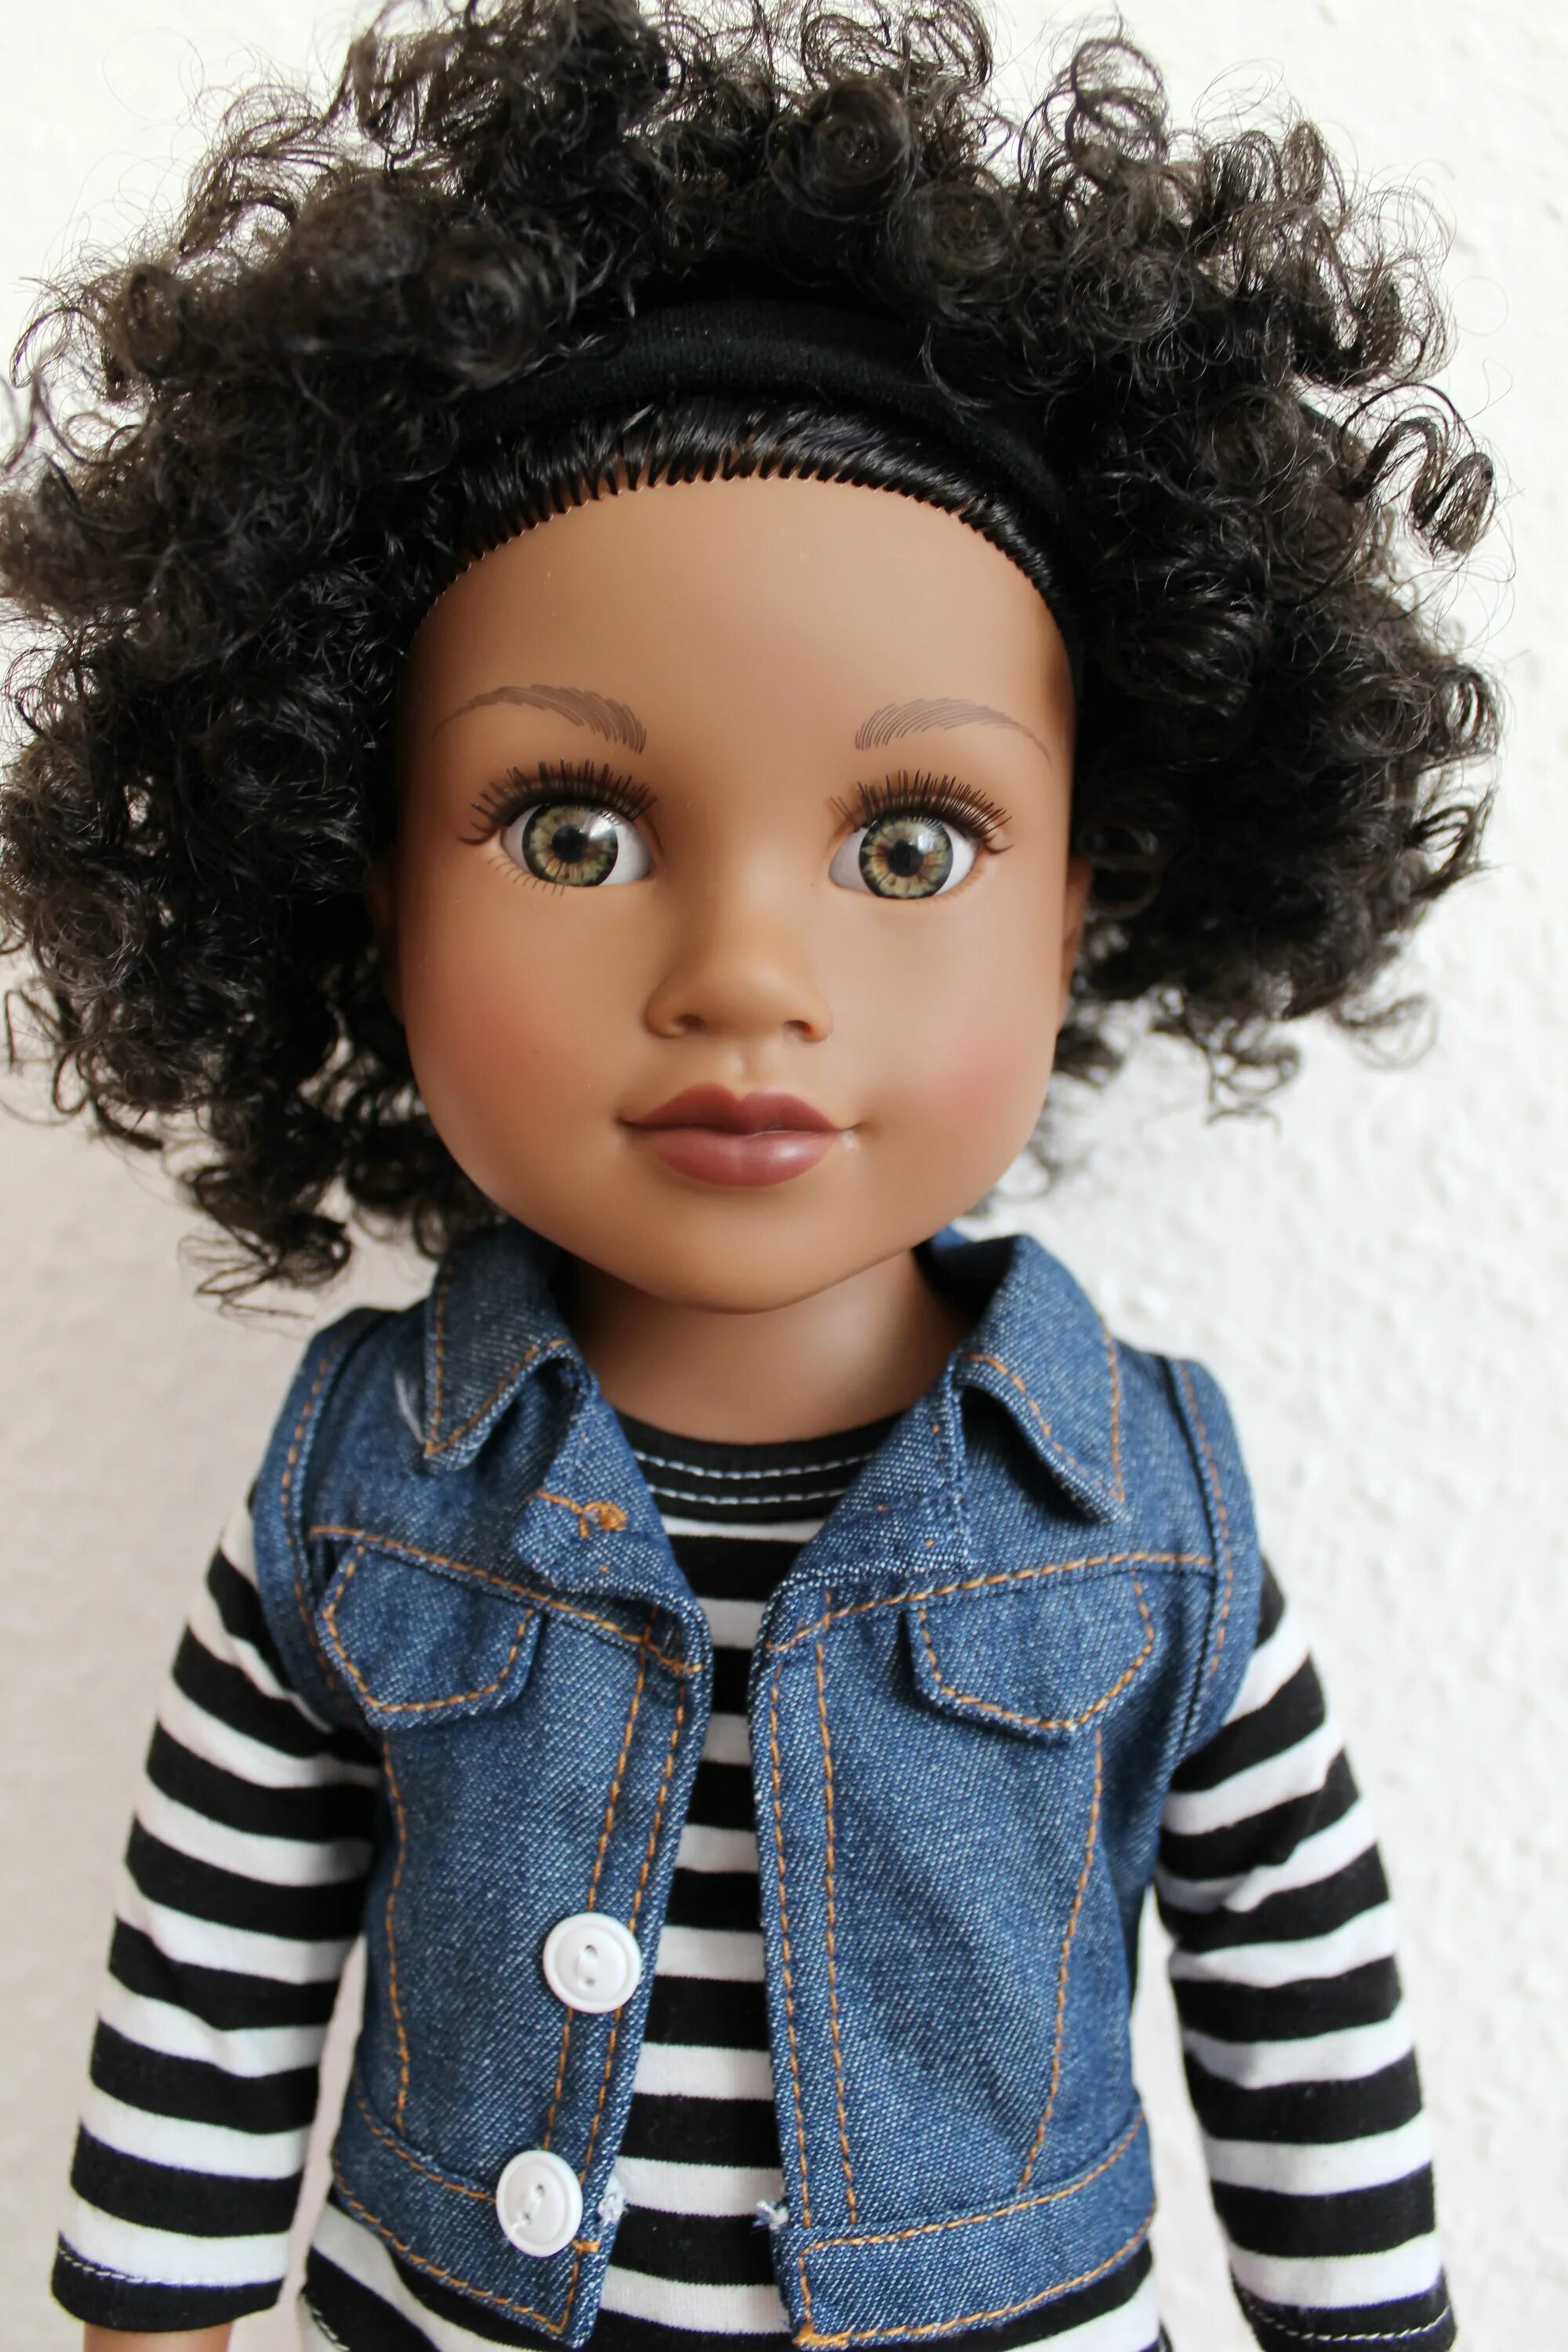 Journey girls. Куклы Джорни герлз. Американские куклы. Journey girls куклы. США чернокожий куклы.